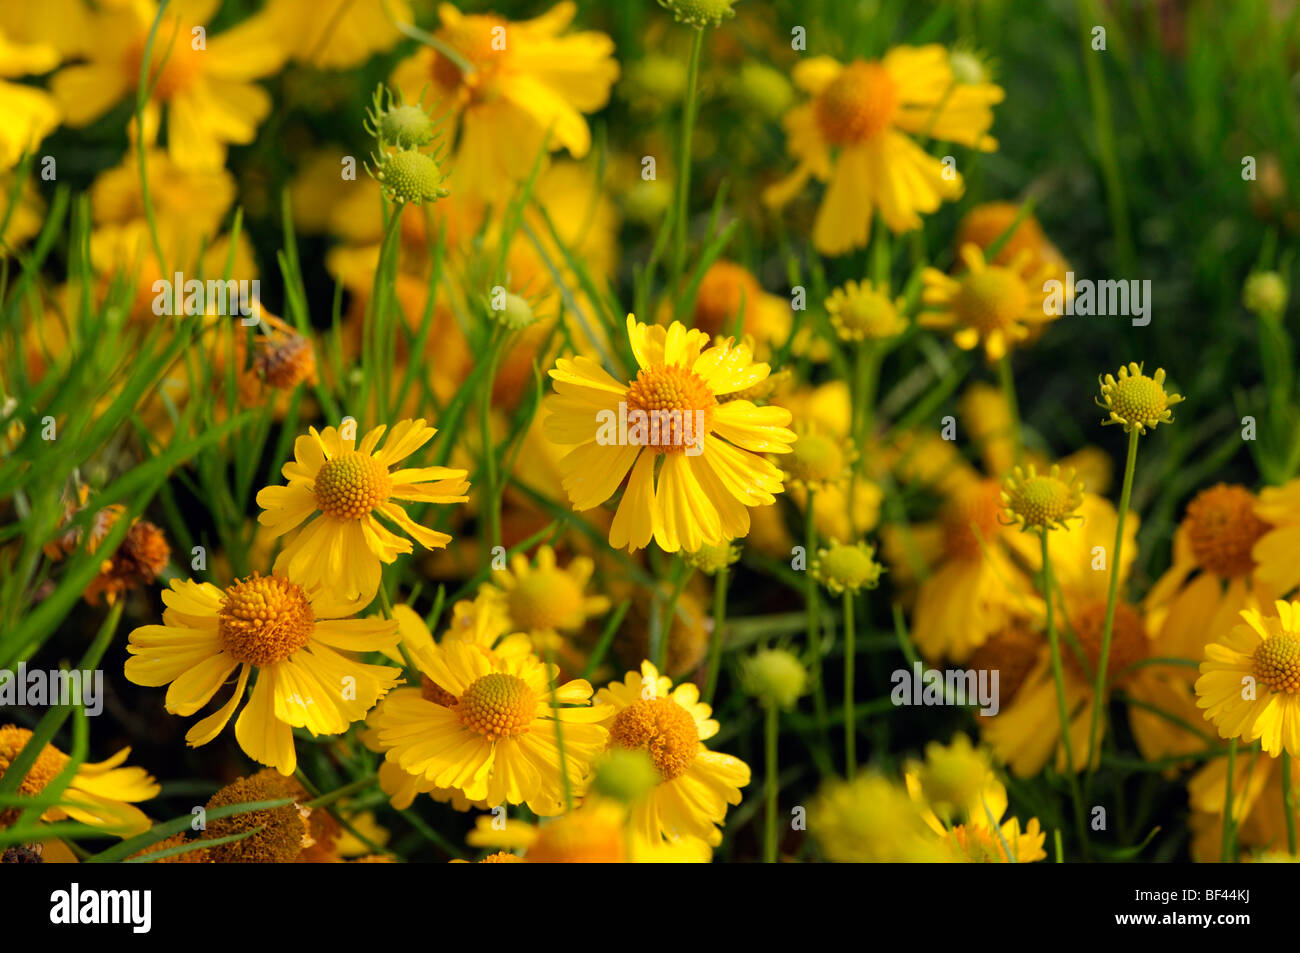 Helenium 'gold field'  flower Sneezeweed closeup close up macro portrait detail flower bloom perennial Stock Photo